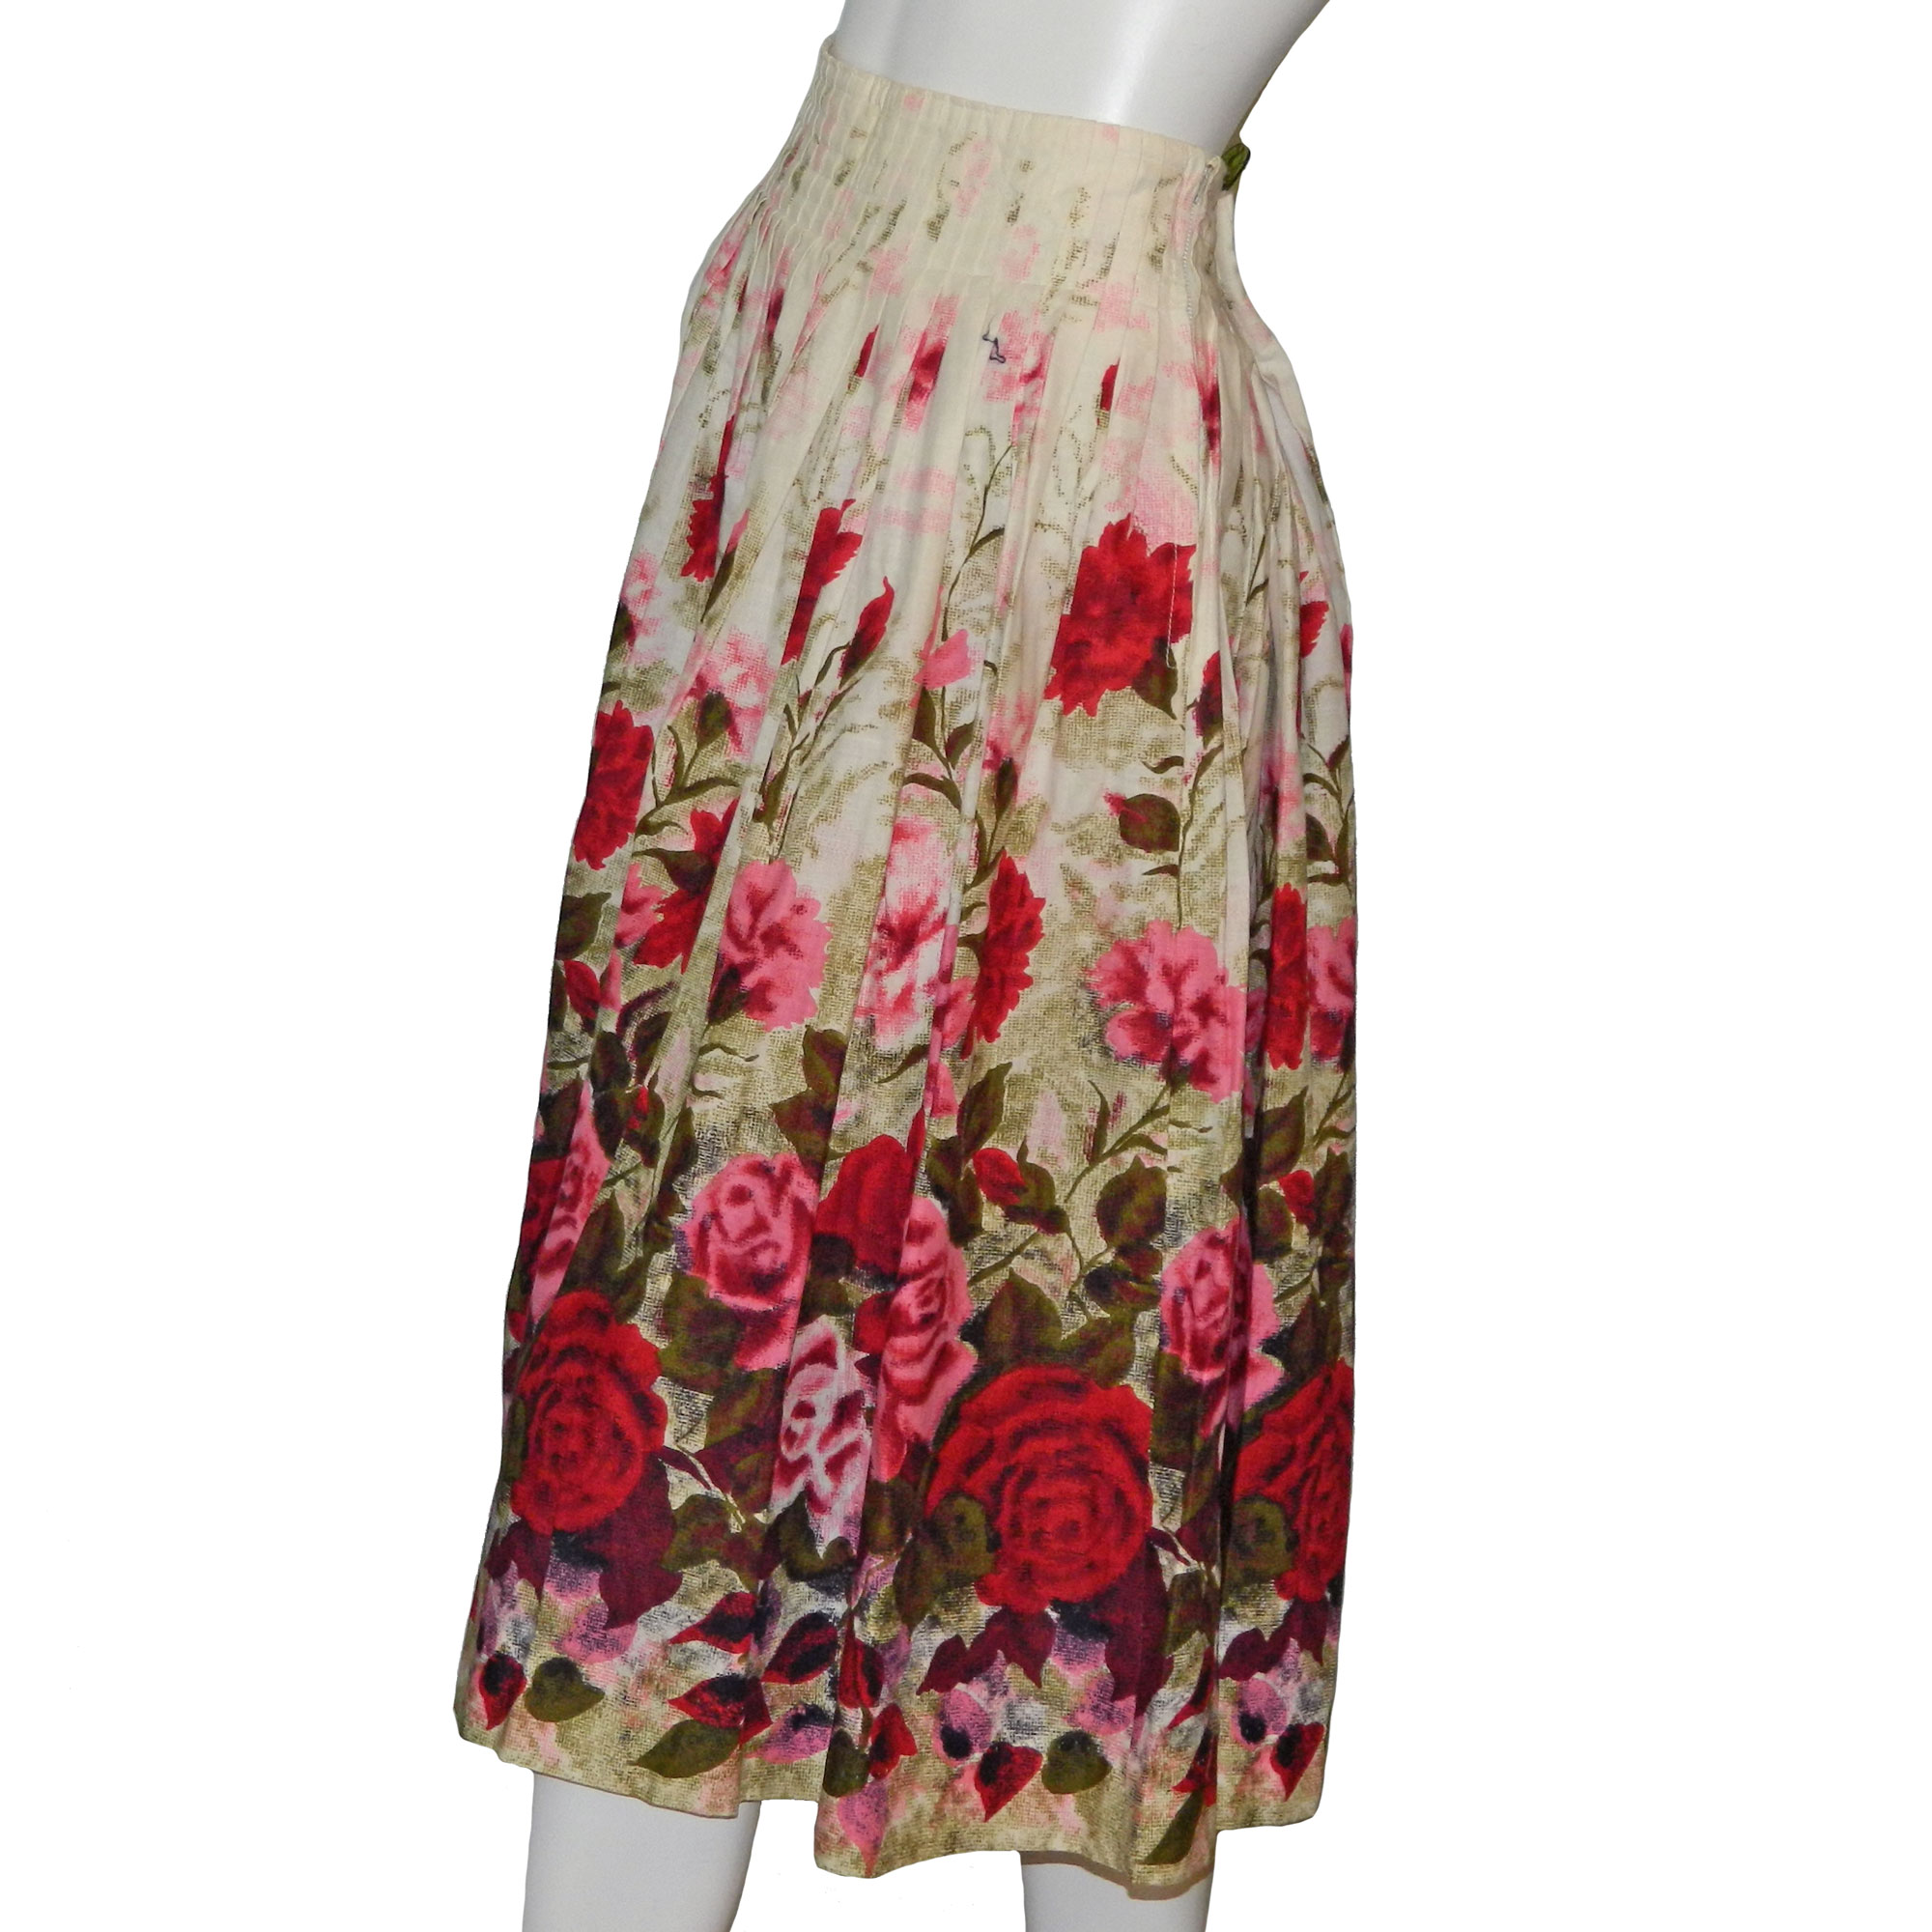 1950s cotton floral skirt